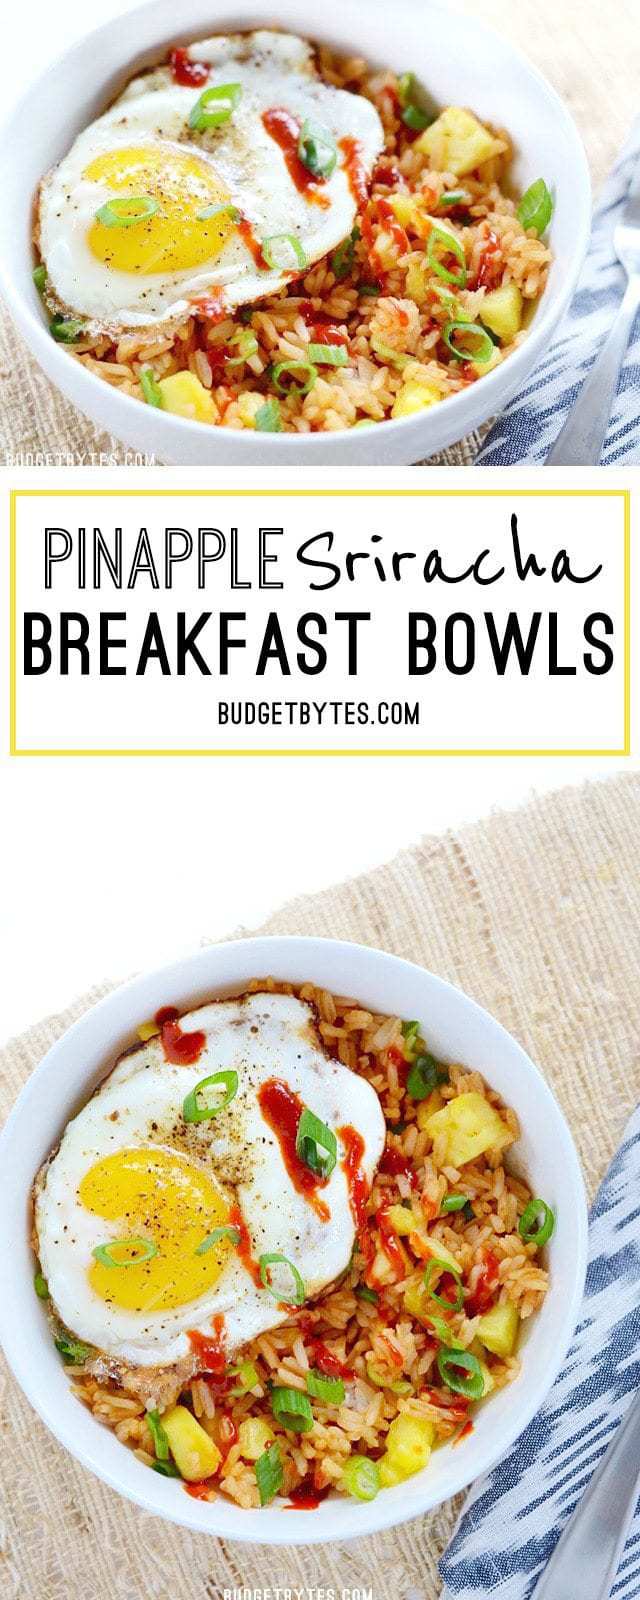 Pineapple Sriracha Breakfast Bowls - BudgetBytes.com